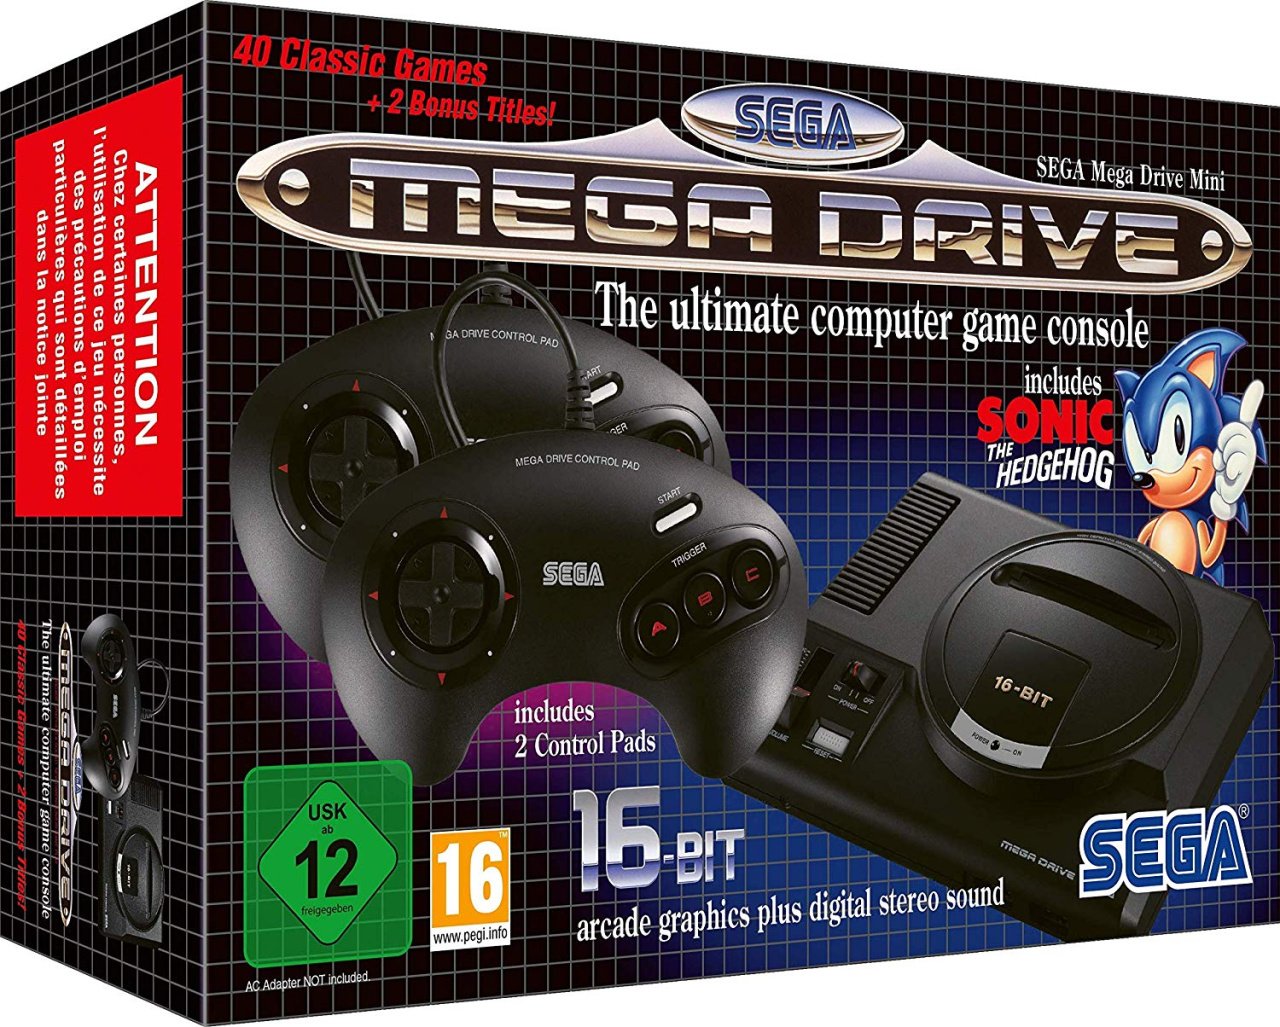 PSA: Make Sure You're Buying The Right Mega Drive Mini This